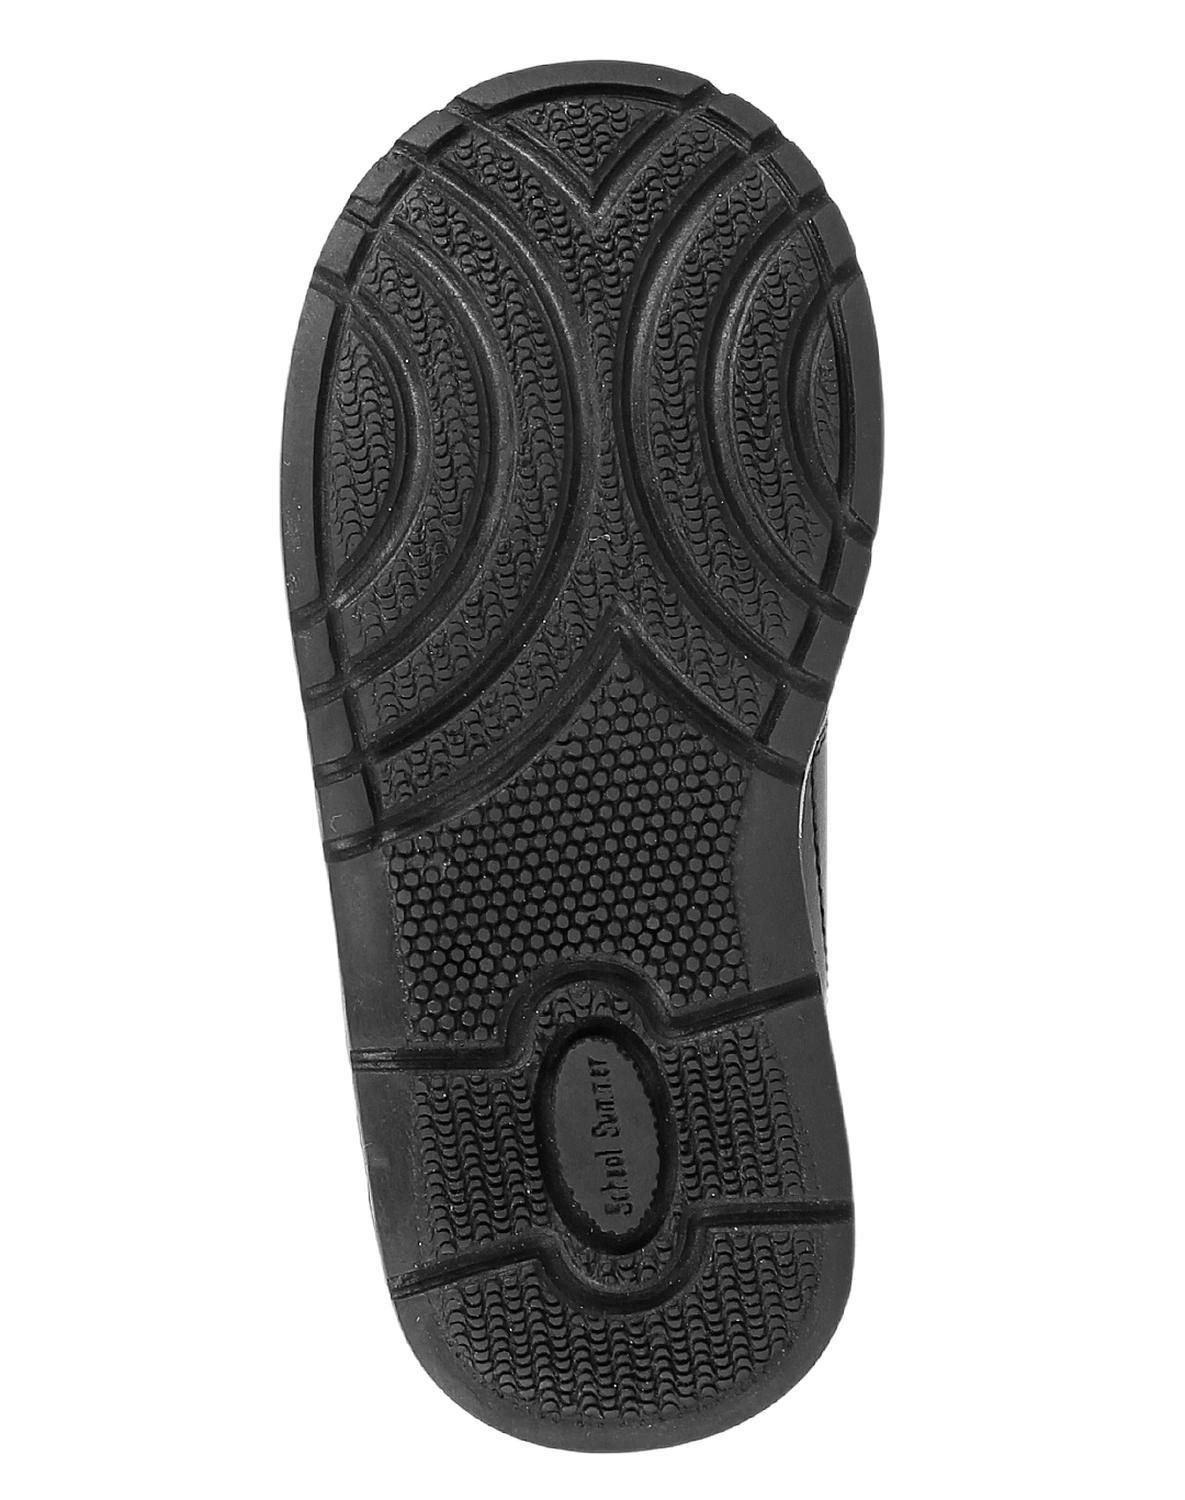 Zapato Escolar Niño Negro Tacto Piel Krsh 19203801